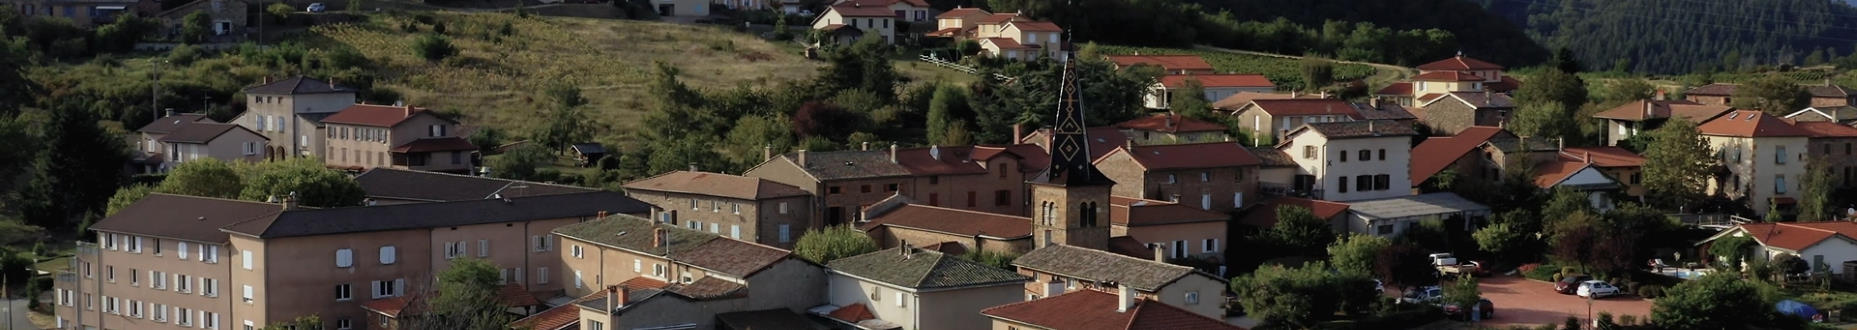 Village de Montmelas Saint Sorlin